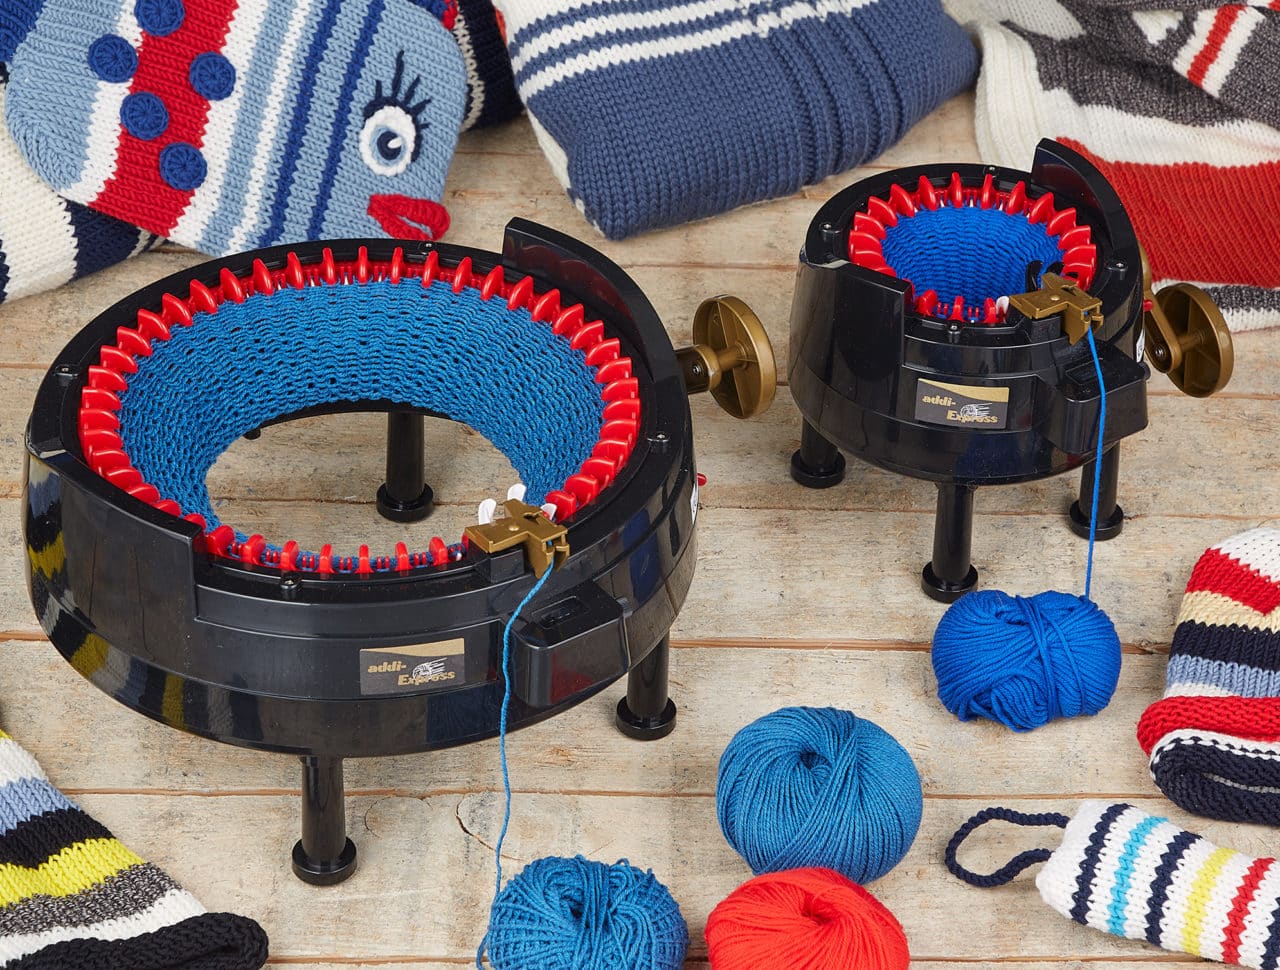 Addi Express King Vs. Toy Knitting Machine 